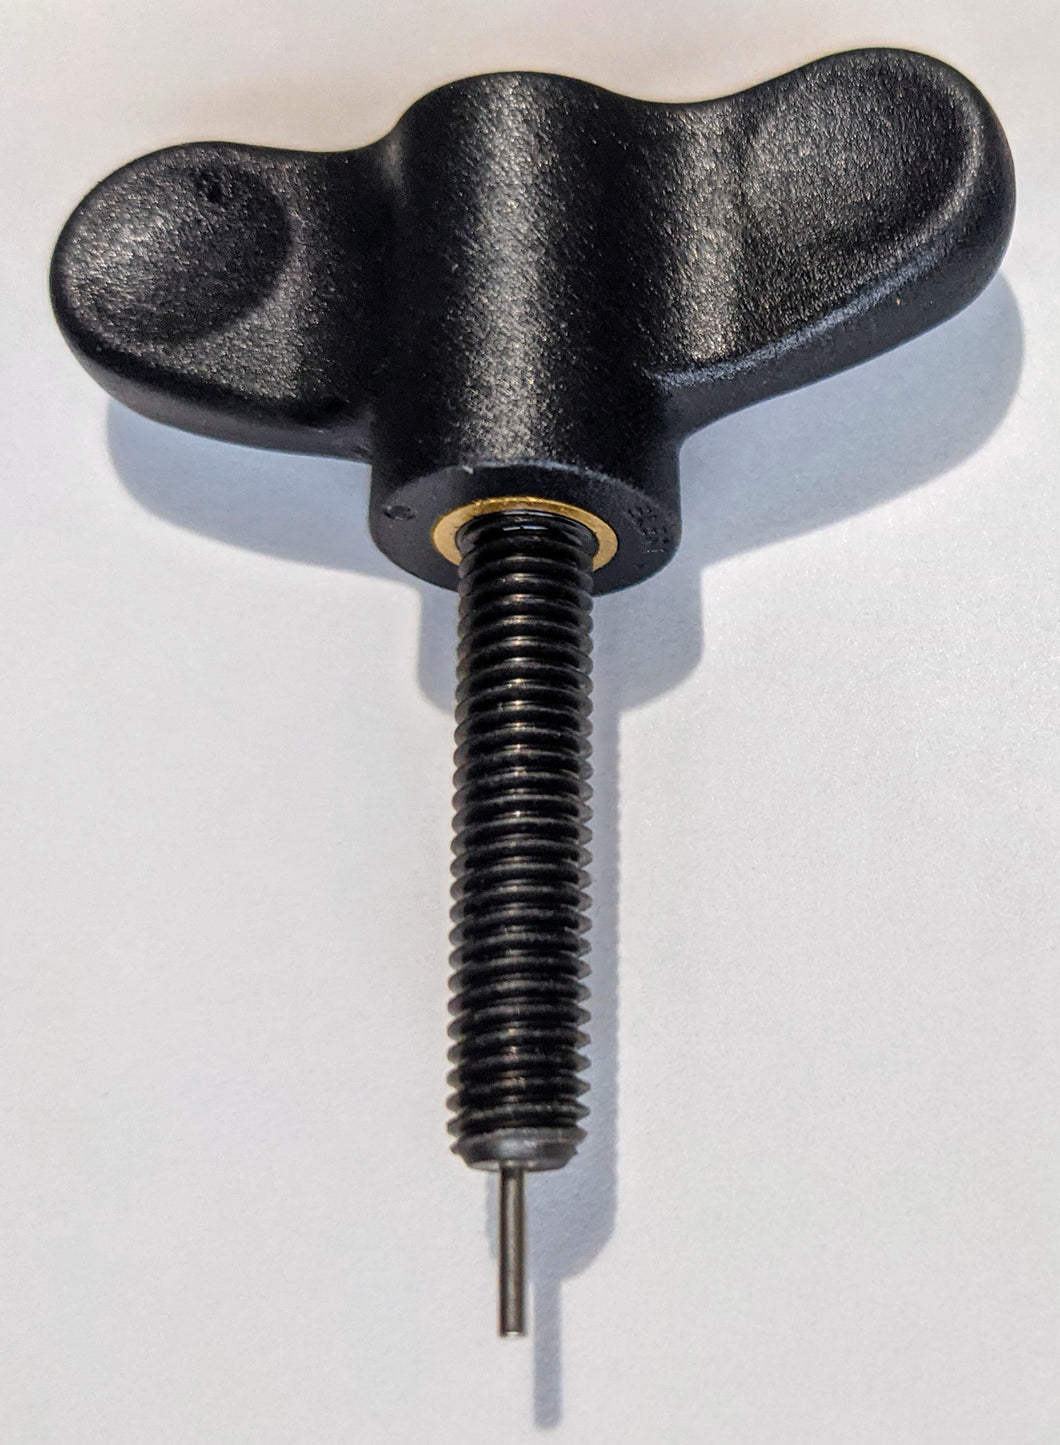 SlotInvasion tool 1.2mm pinion extractor- SI tool Optional push pin mandrel